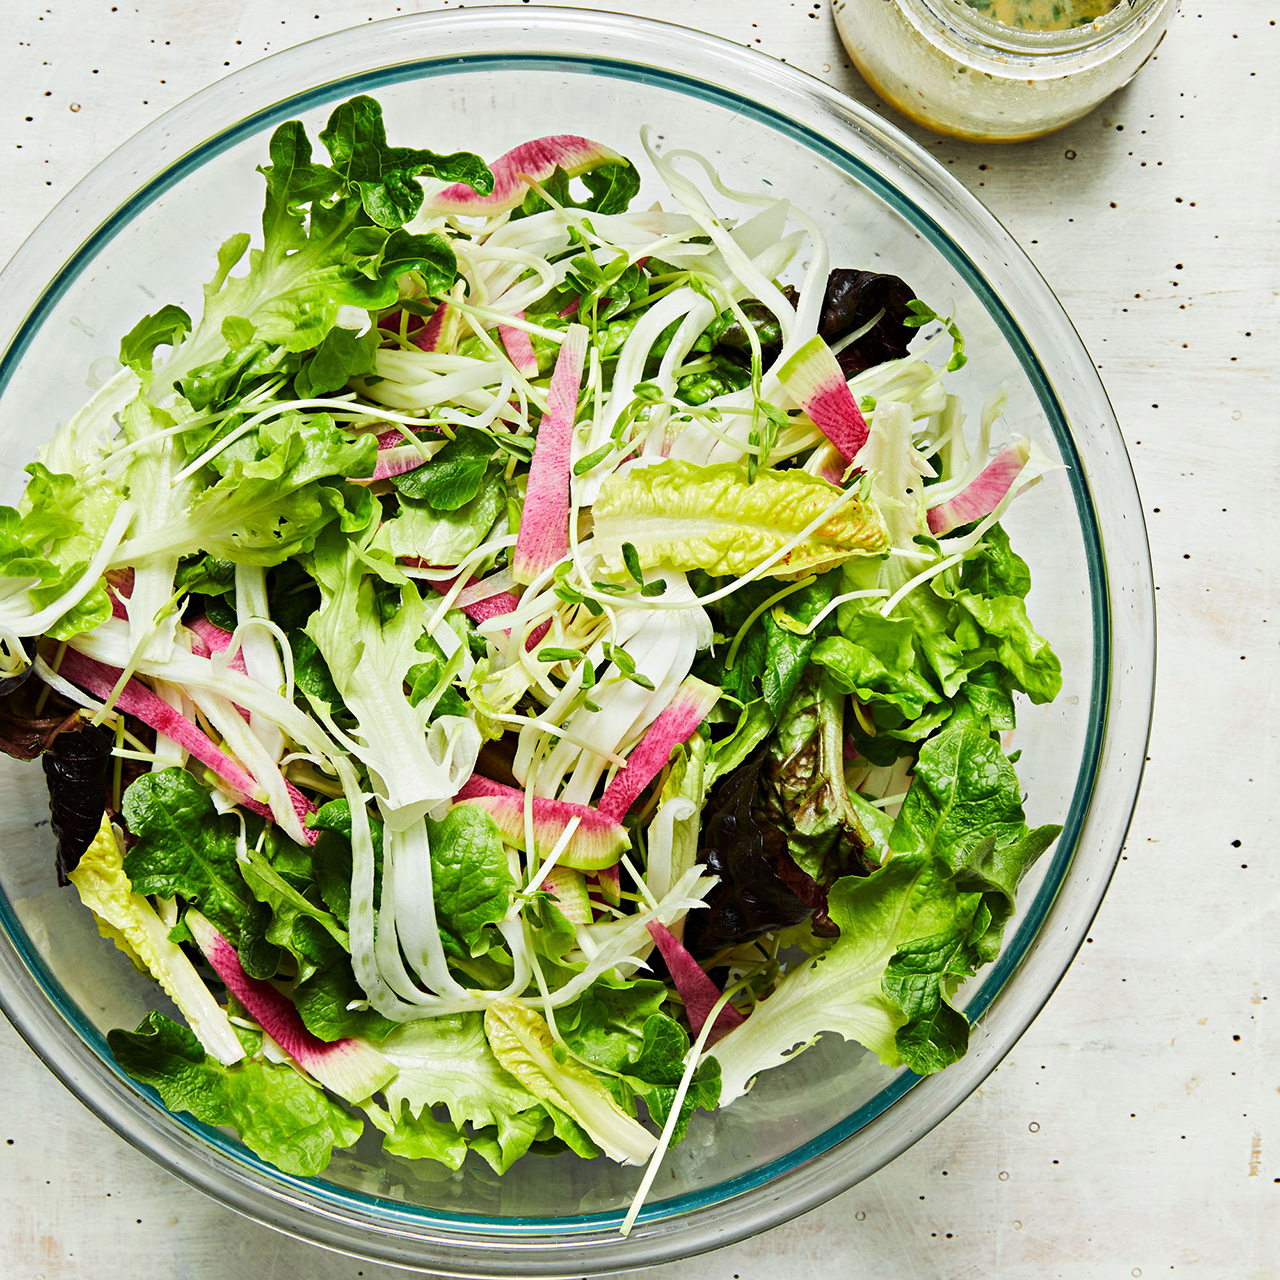 Rachael Ray's Spring Greens Salad